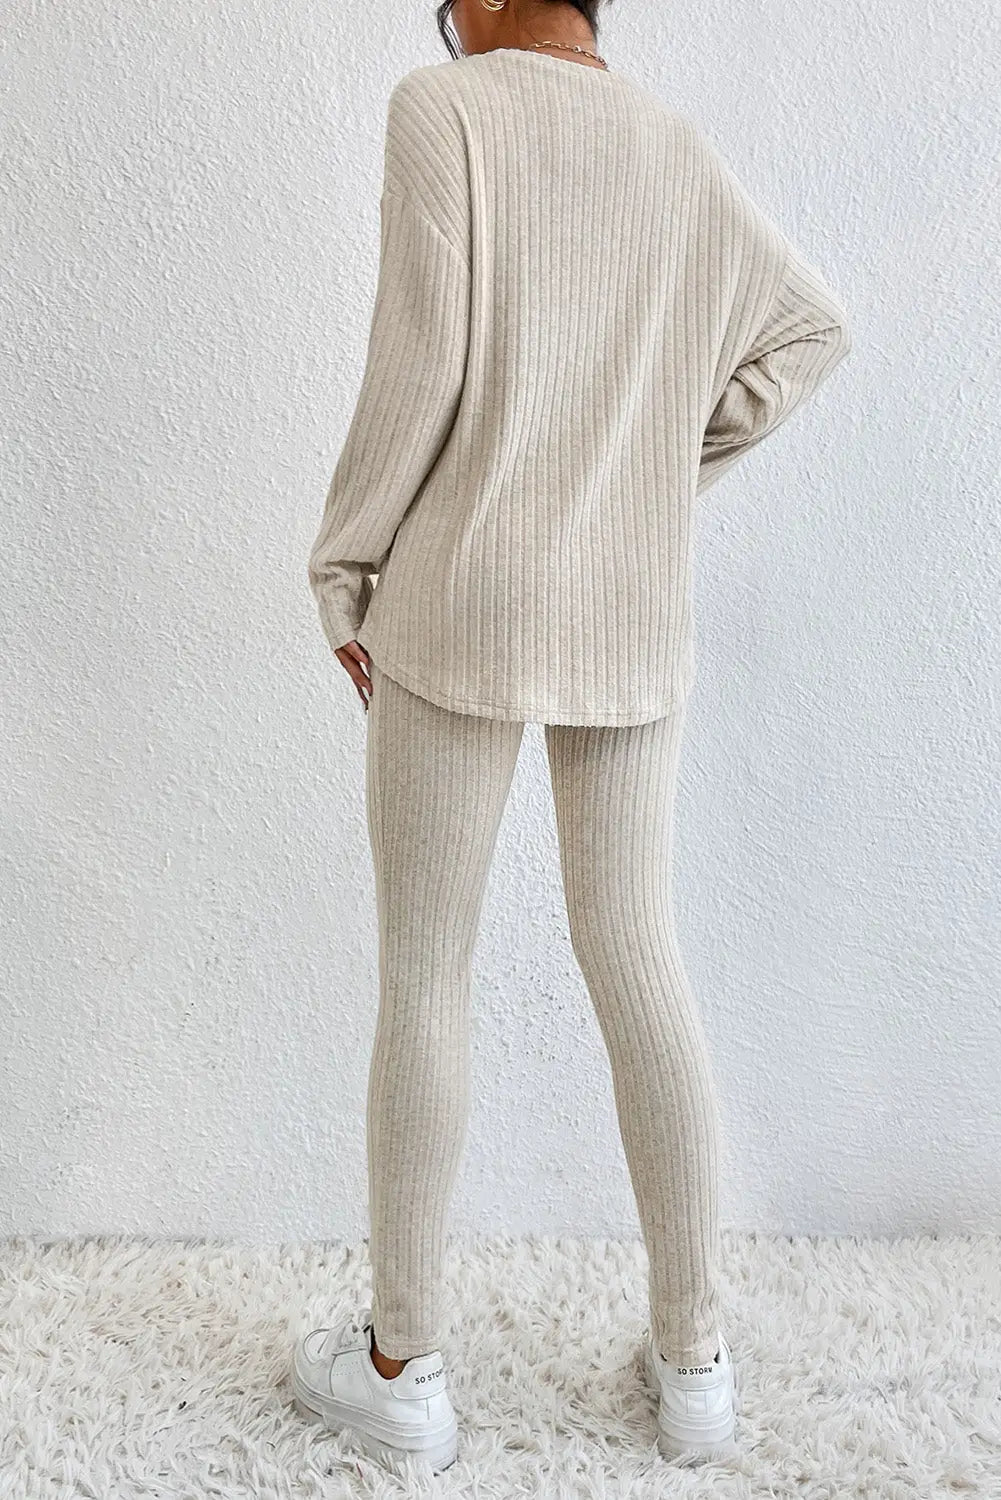 Gray ribbed knit slouchy hoodie wide leg pants set - loungewear